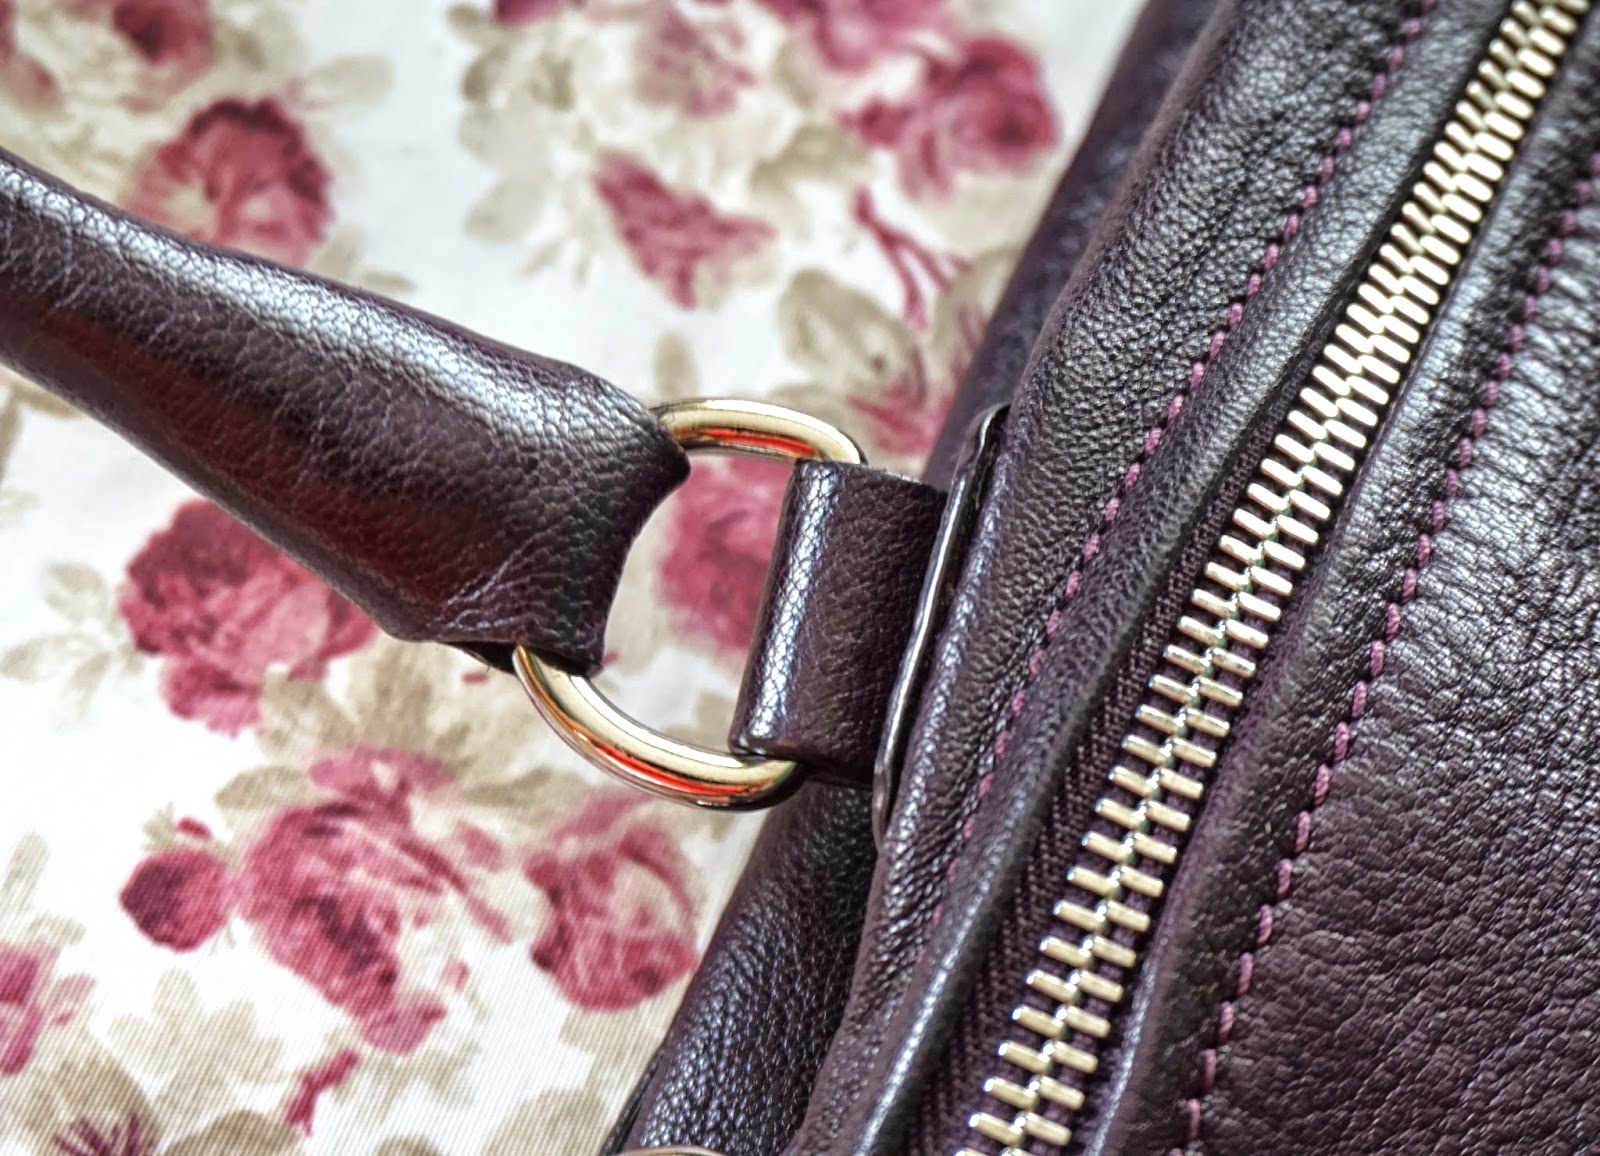 BAG REVIEW: Givenchy Pandora Medium in Aube + Spot A Fake Givenchy Pandora